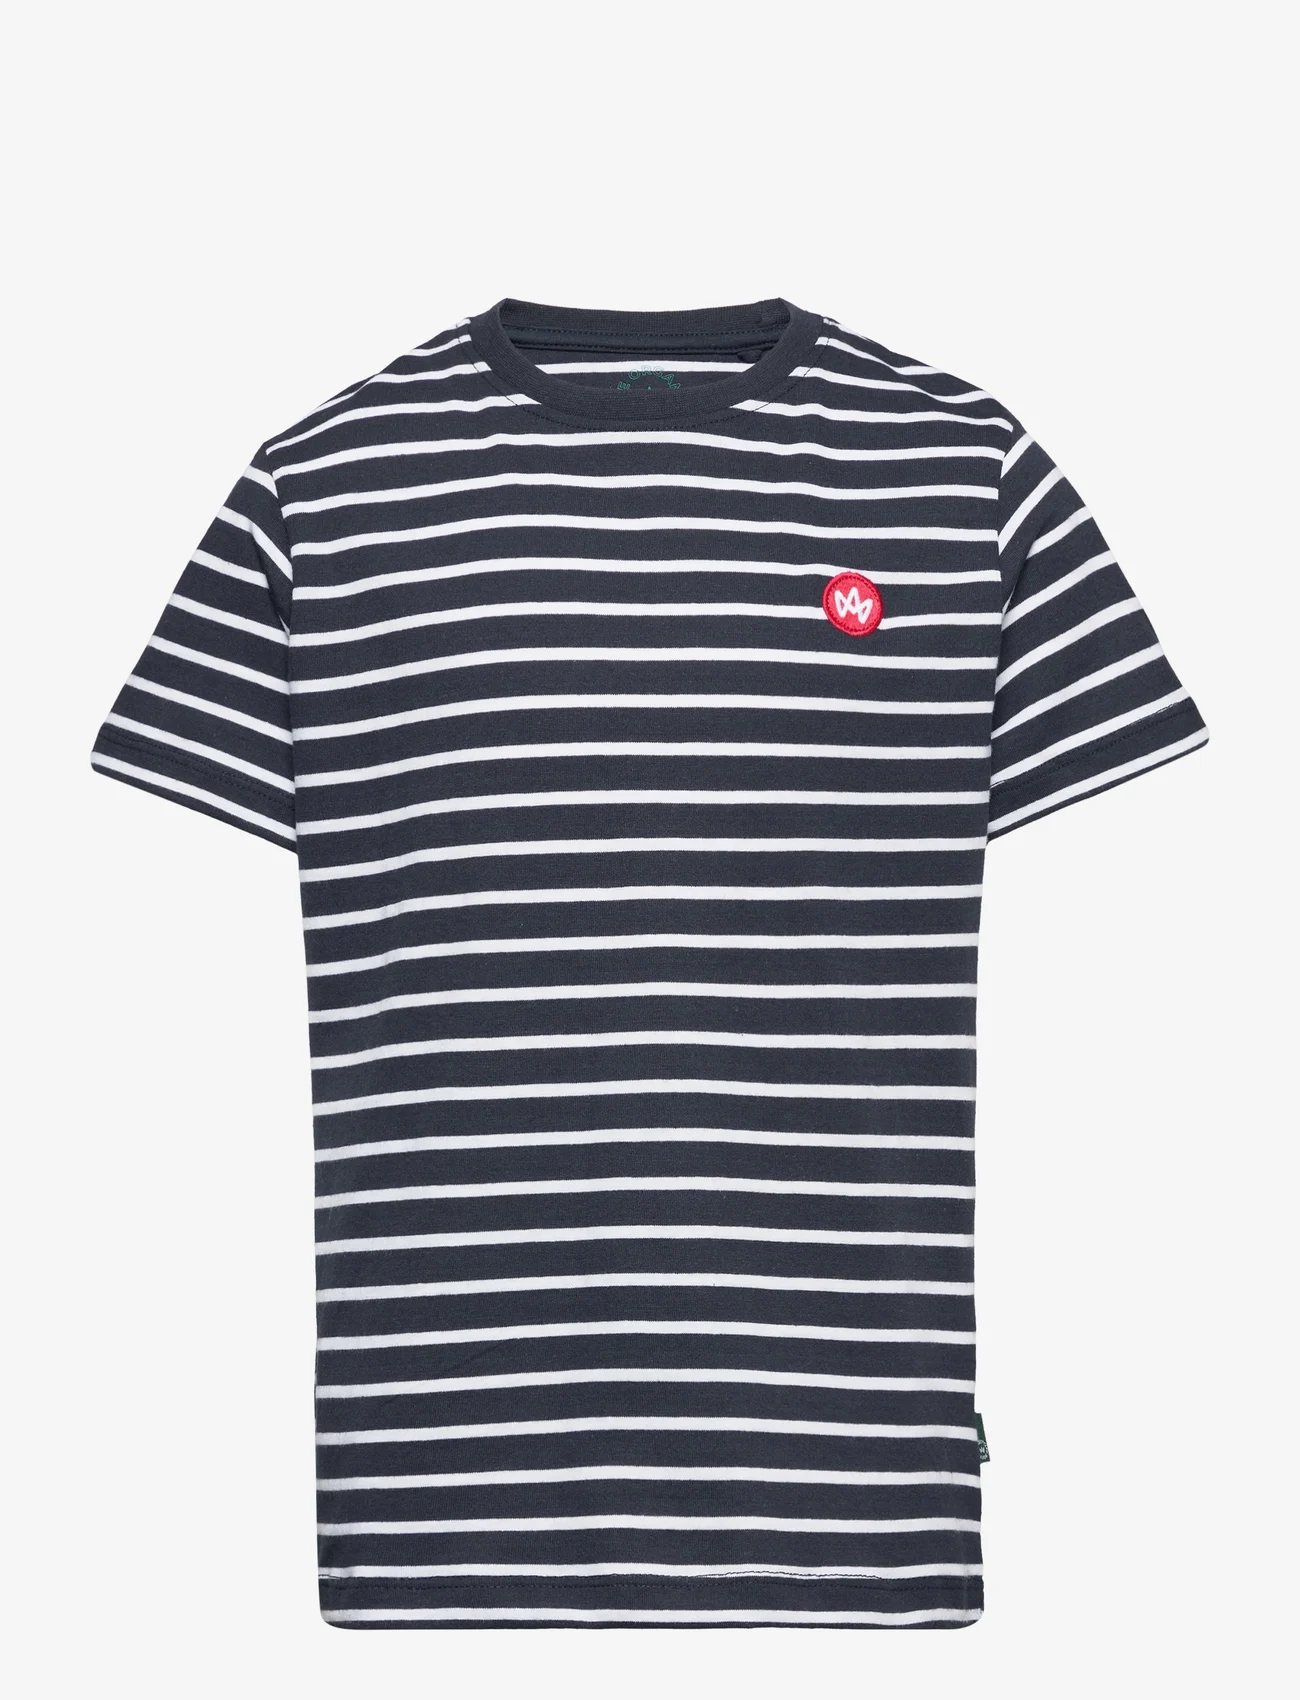 Kronstadt - Timmi Kids Organic/Recycled striped t-shirt - kurzärmelige - navy / white - 0